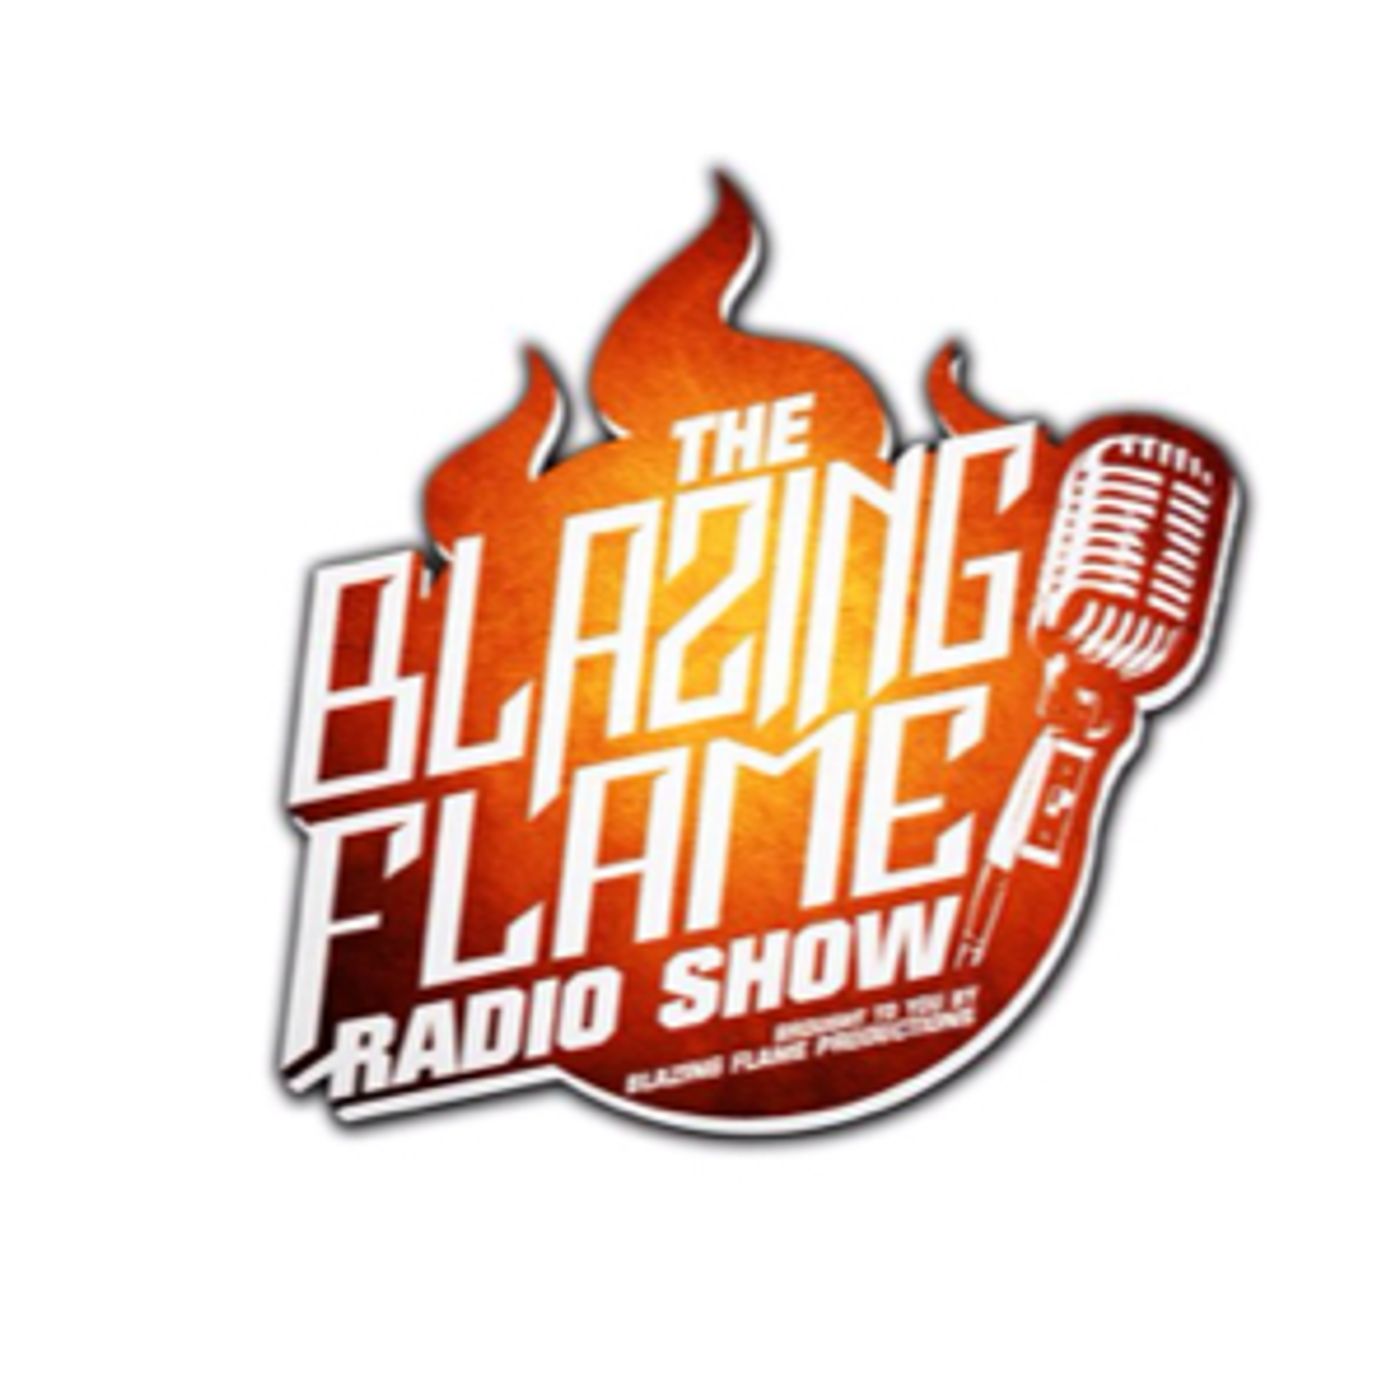 The Blazing Flame Radio Show